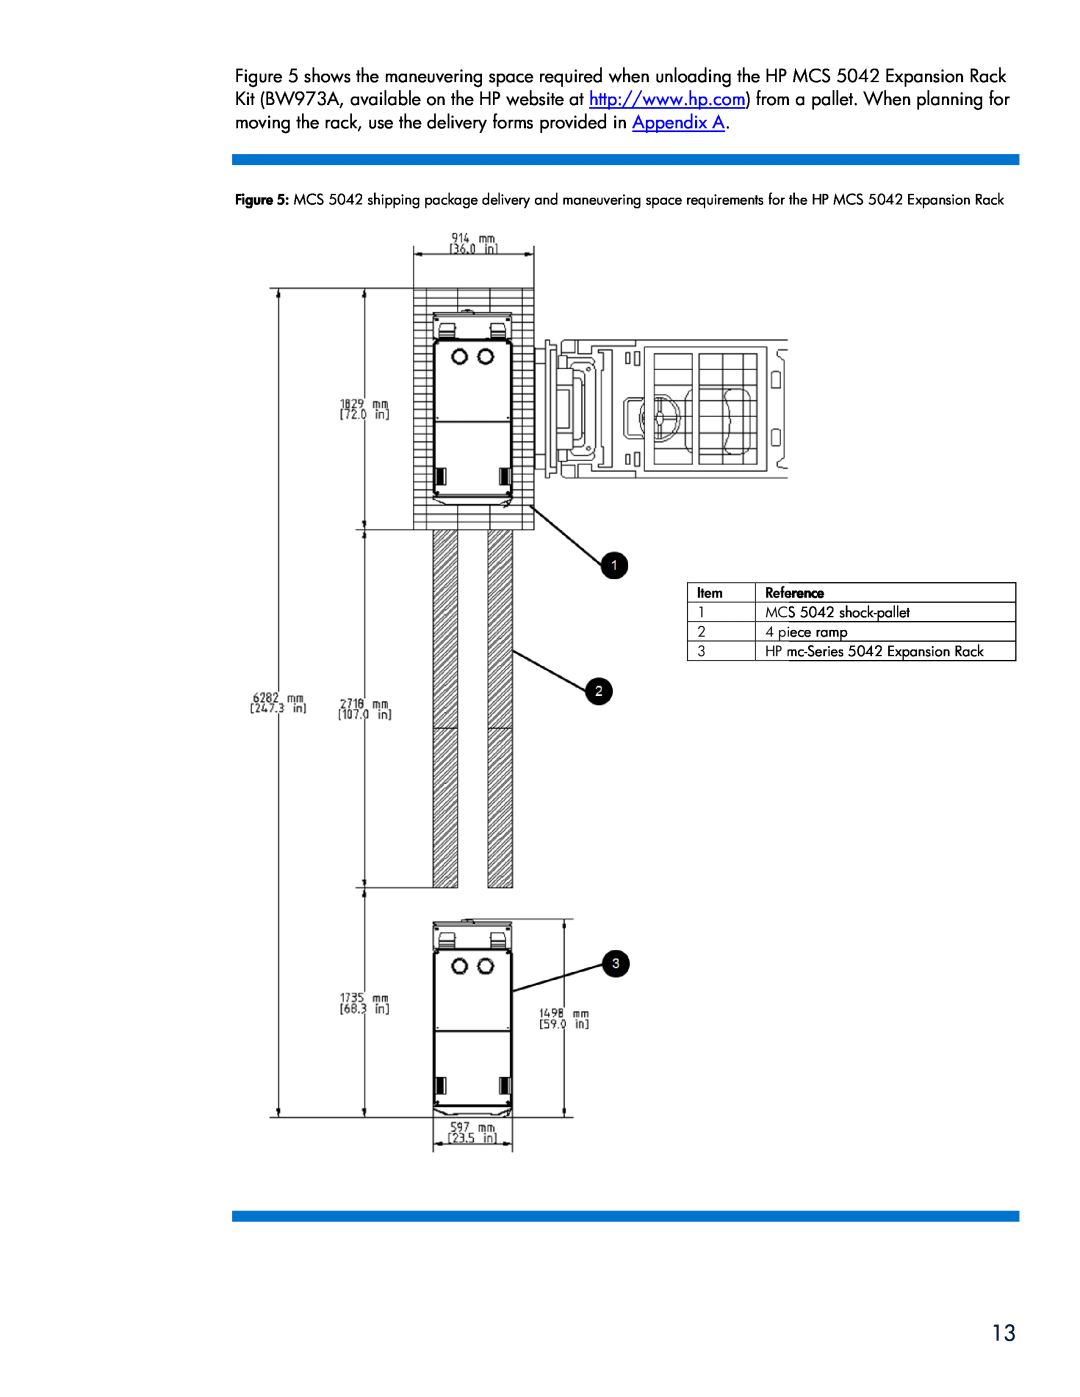 HP Modular Cooling System manual Reference, MCS 5042 shock-pallet, piece ramp, HP mc-Series 5042 Expansion Rack 